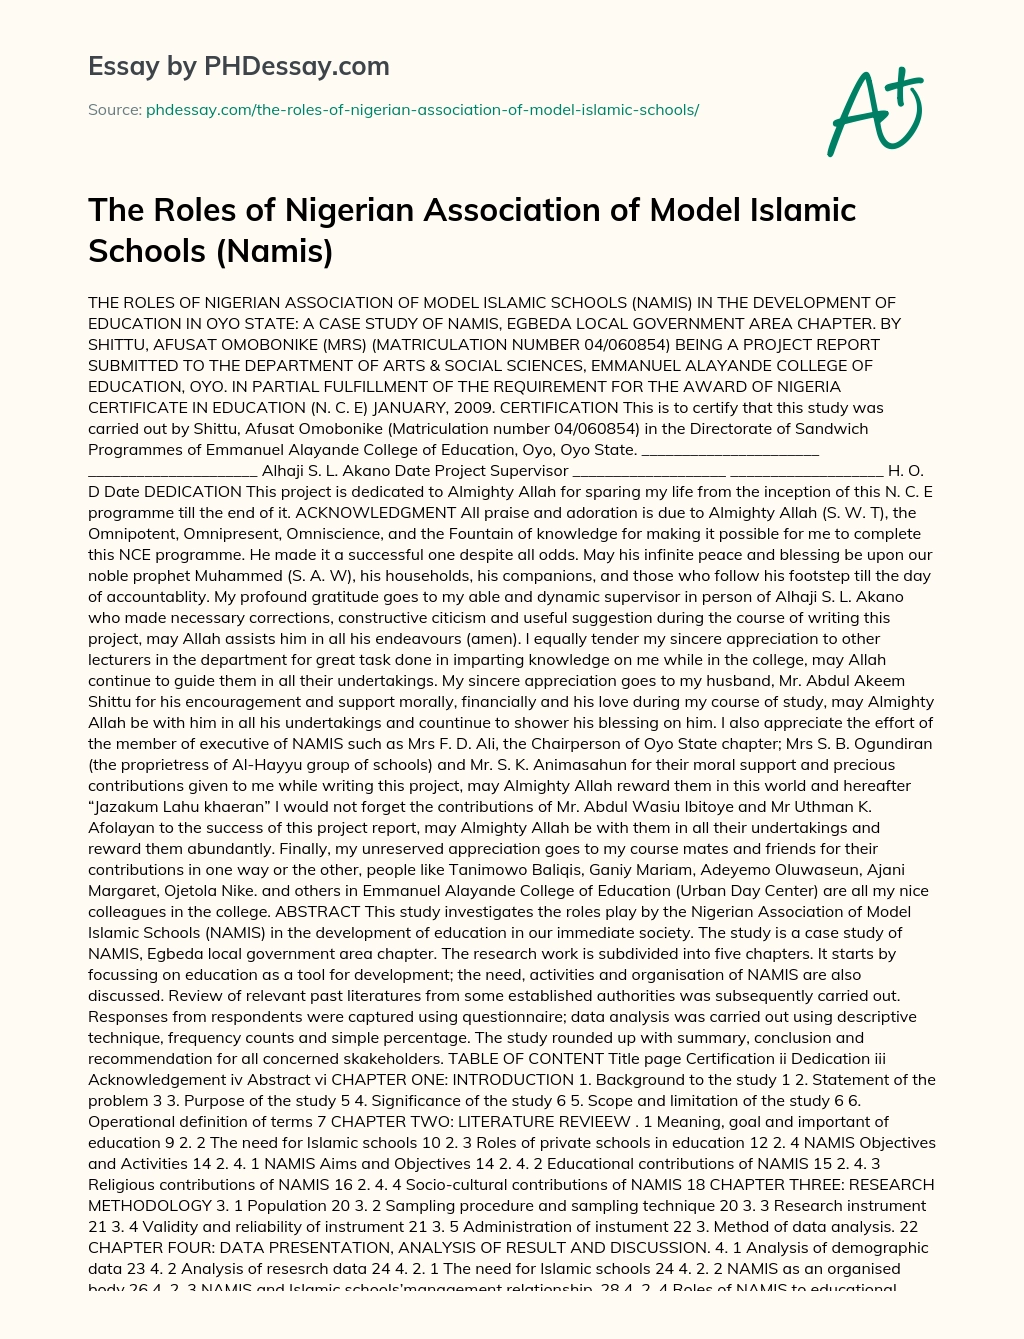 The Roles of Nigerian Association of Model Islamic Schools (Namis) essay